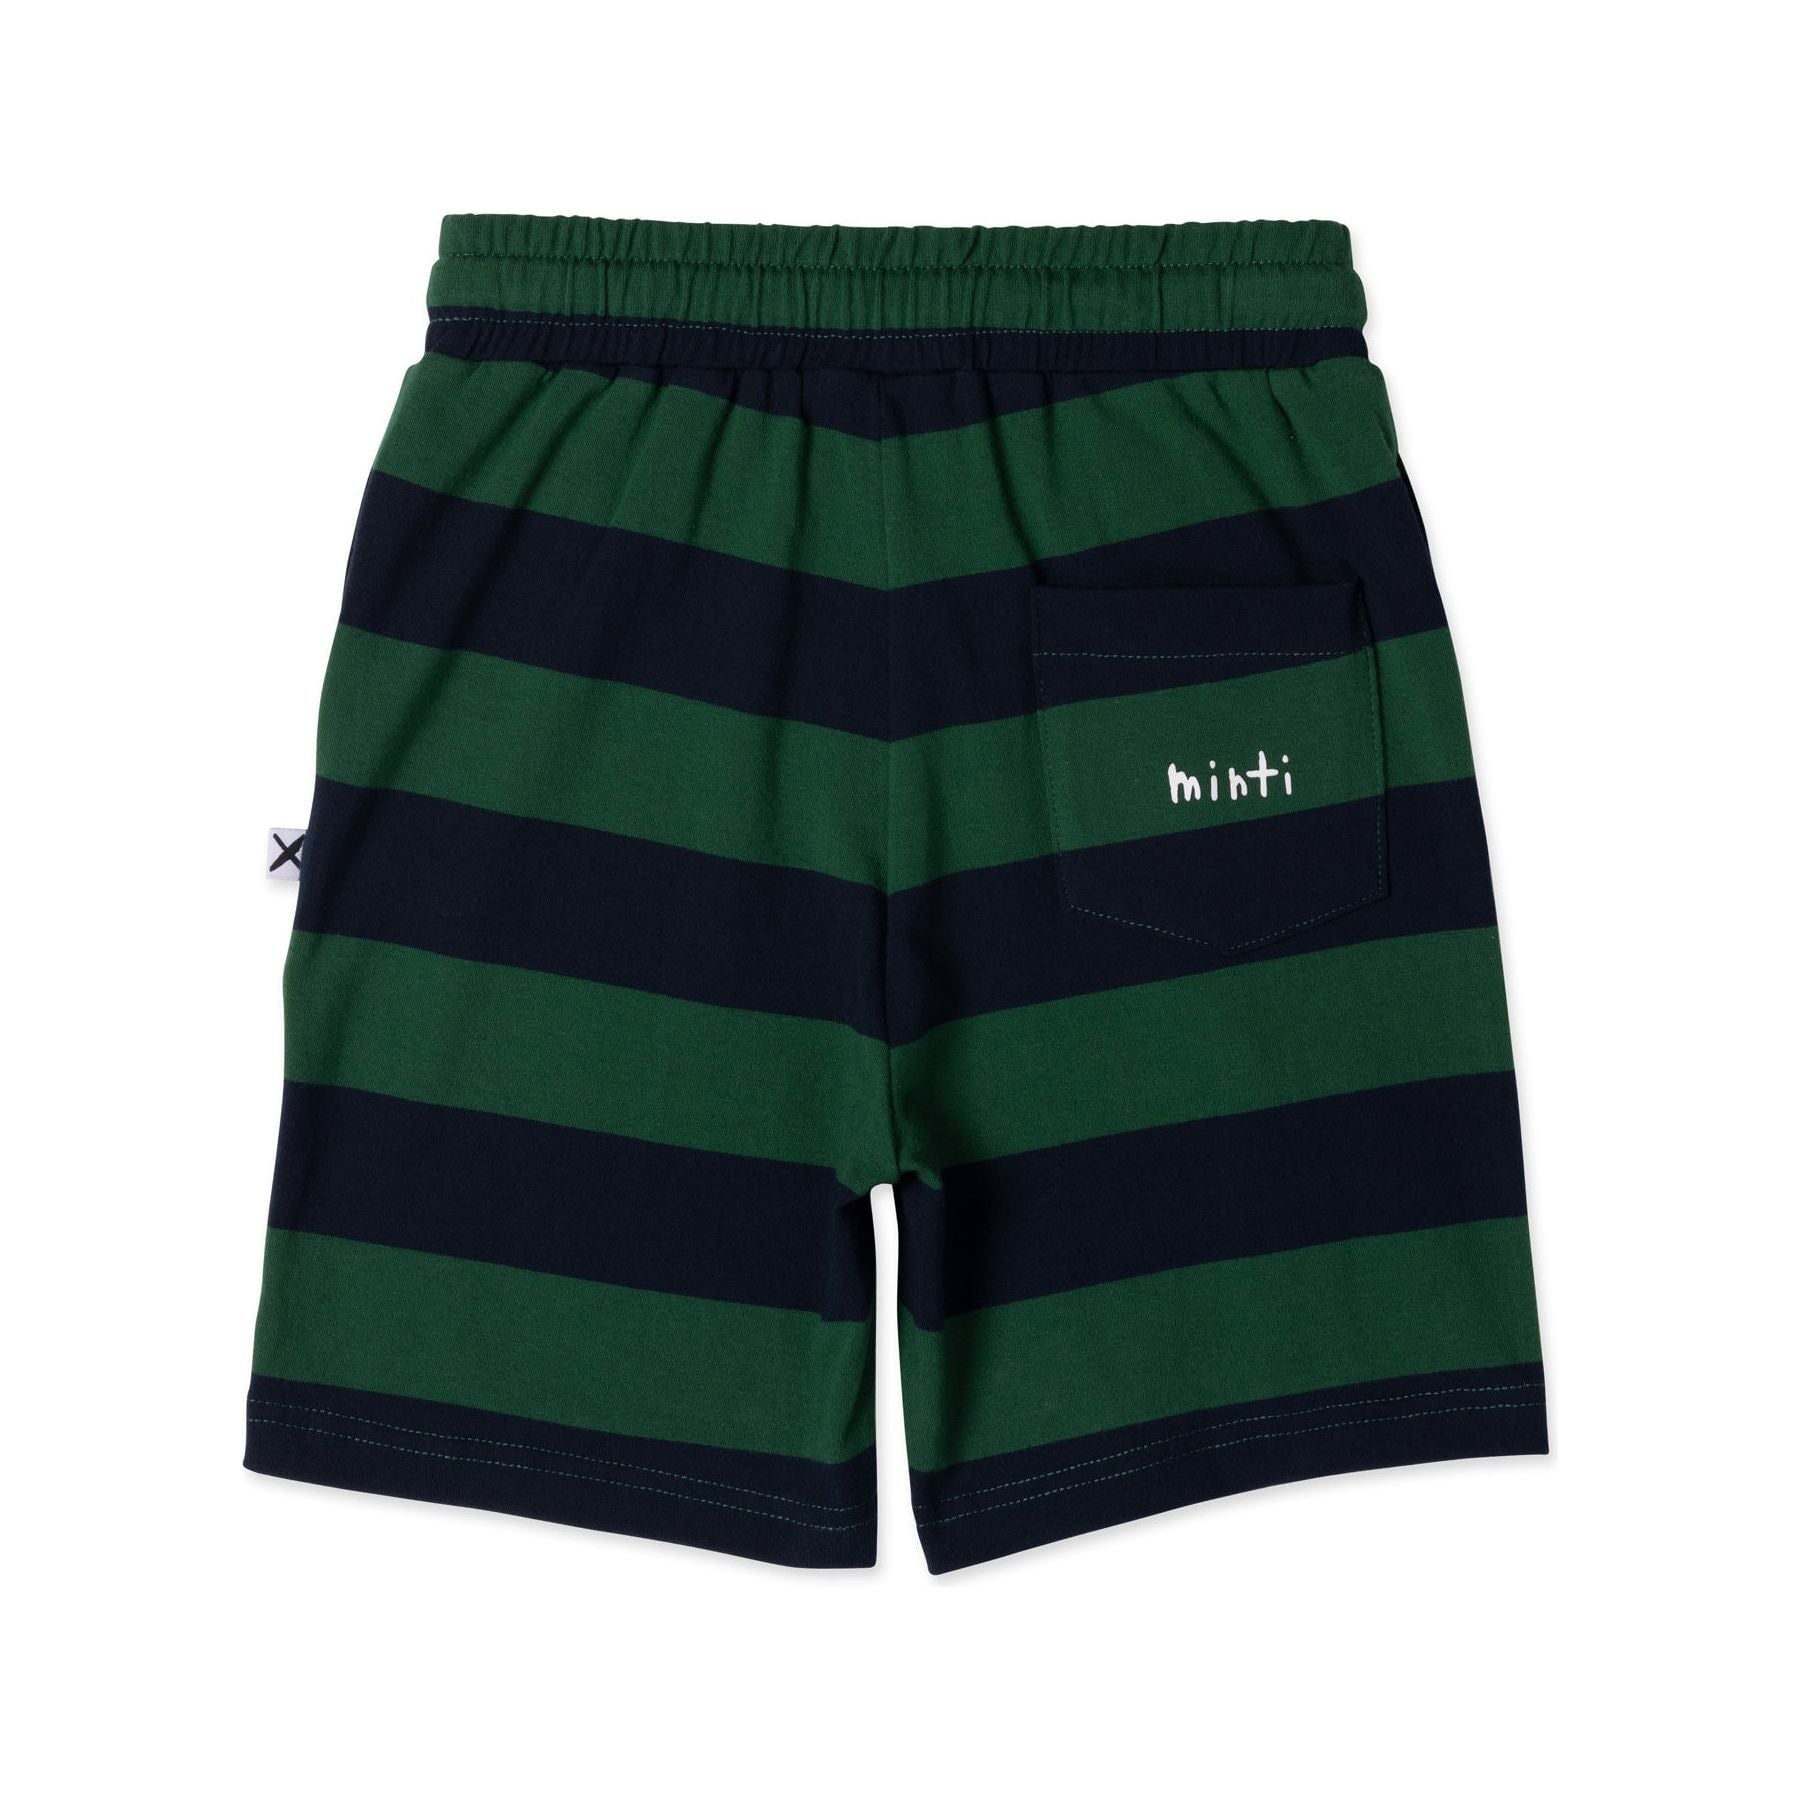 Duo Short- Green/Navy Stripe